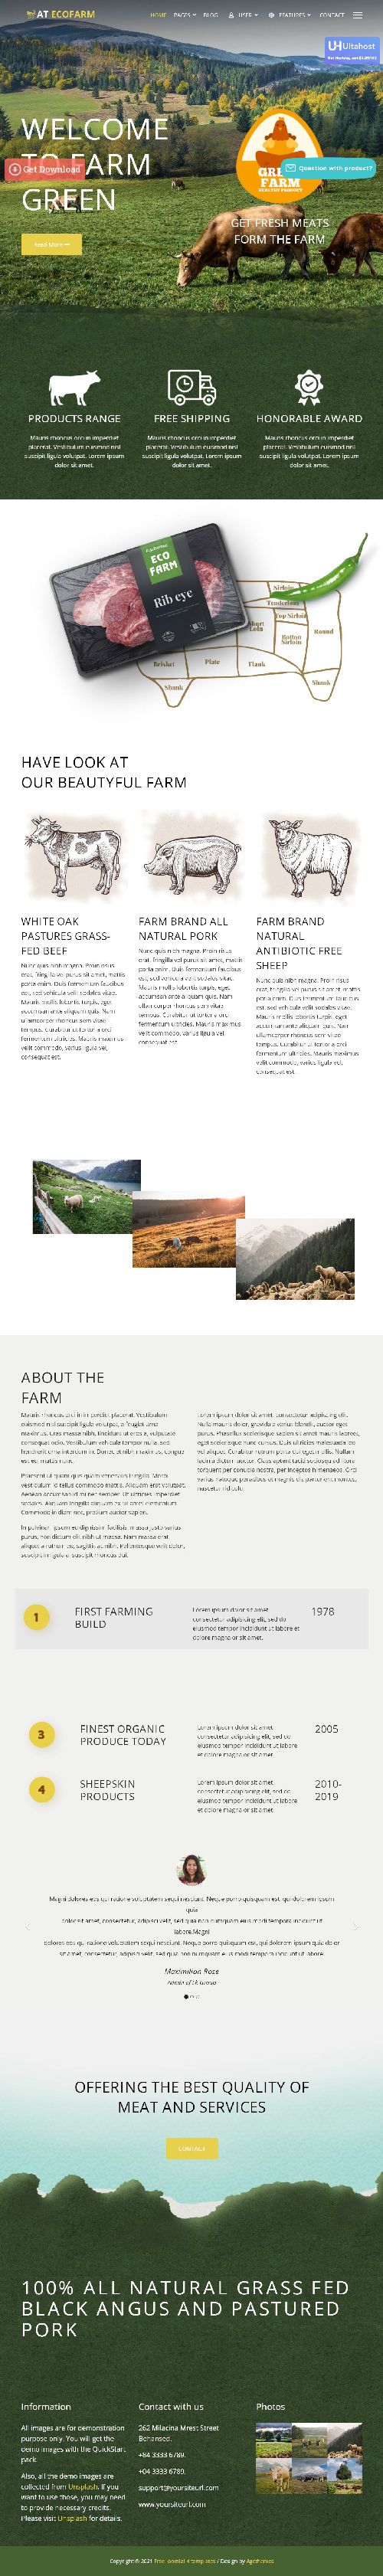 Ecofarm Onepage - Joomla Template for Farming Business & Services